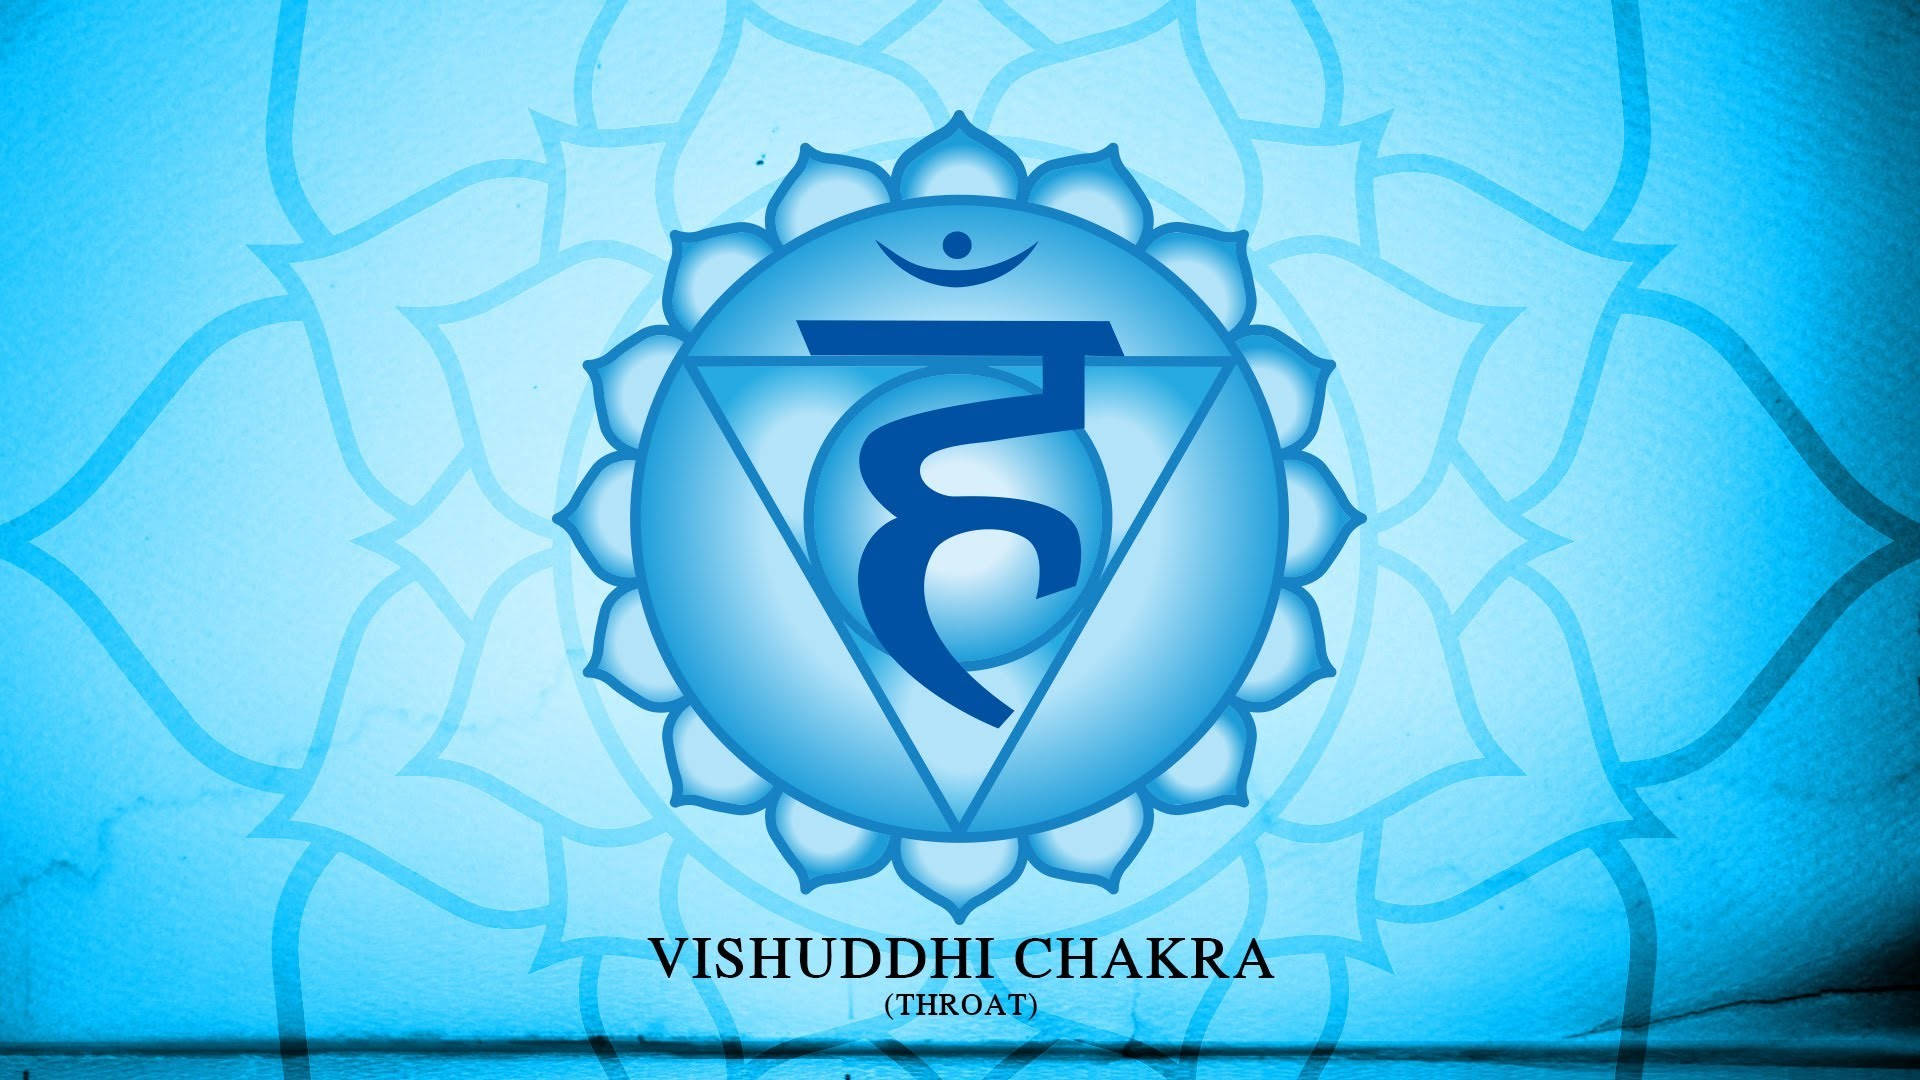 Logoet for Vishuddhi Chakra forsvinder i den koralblå baggrund. Wallpaper